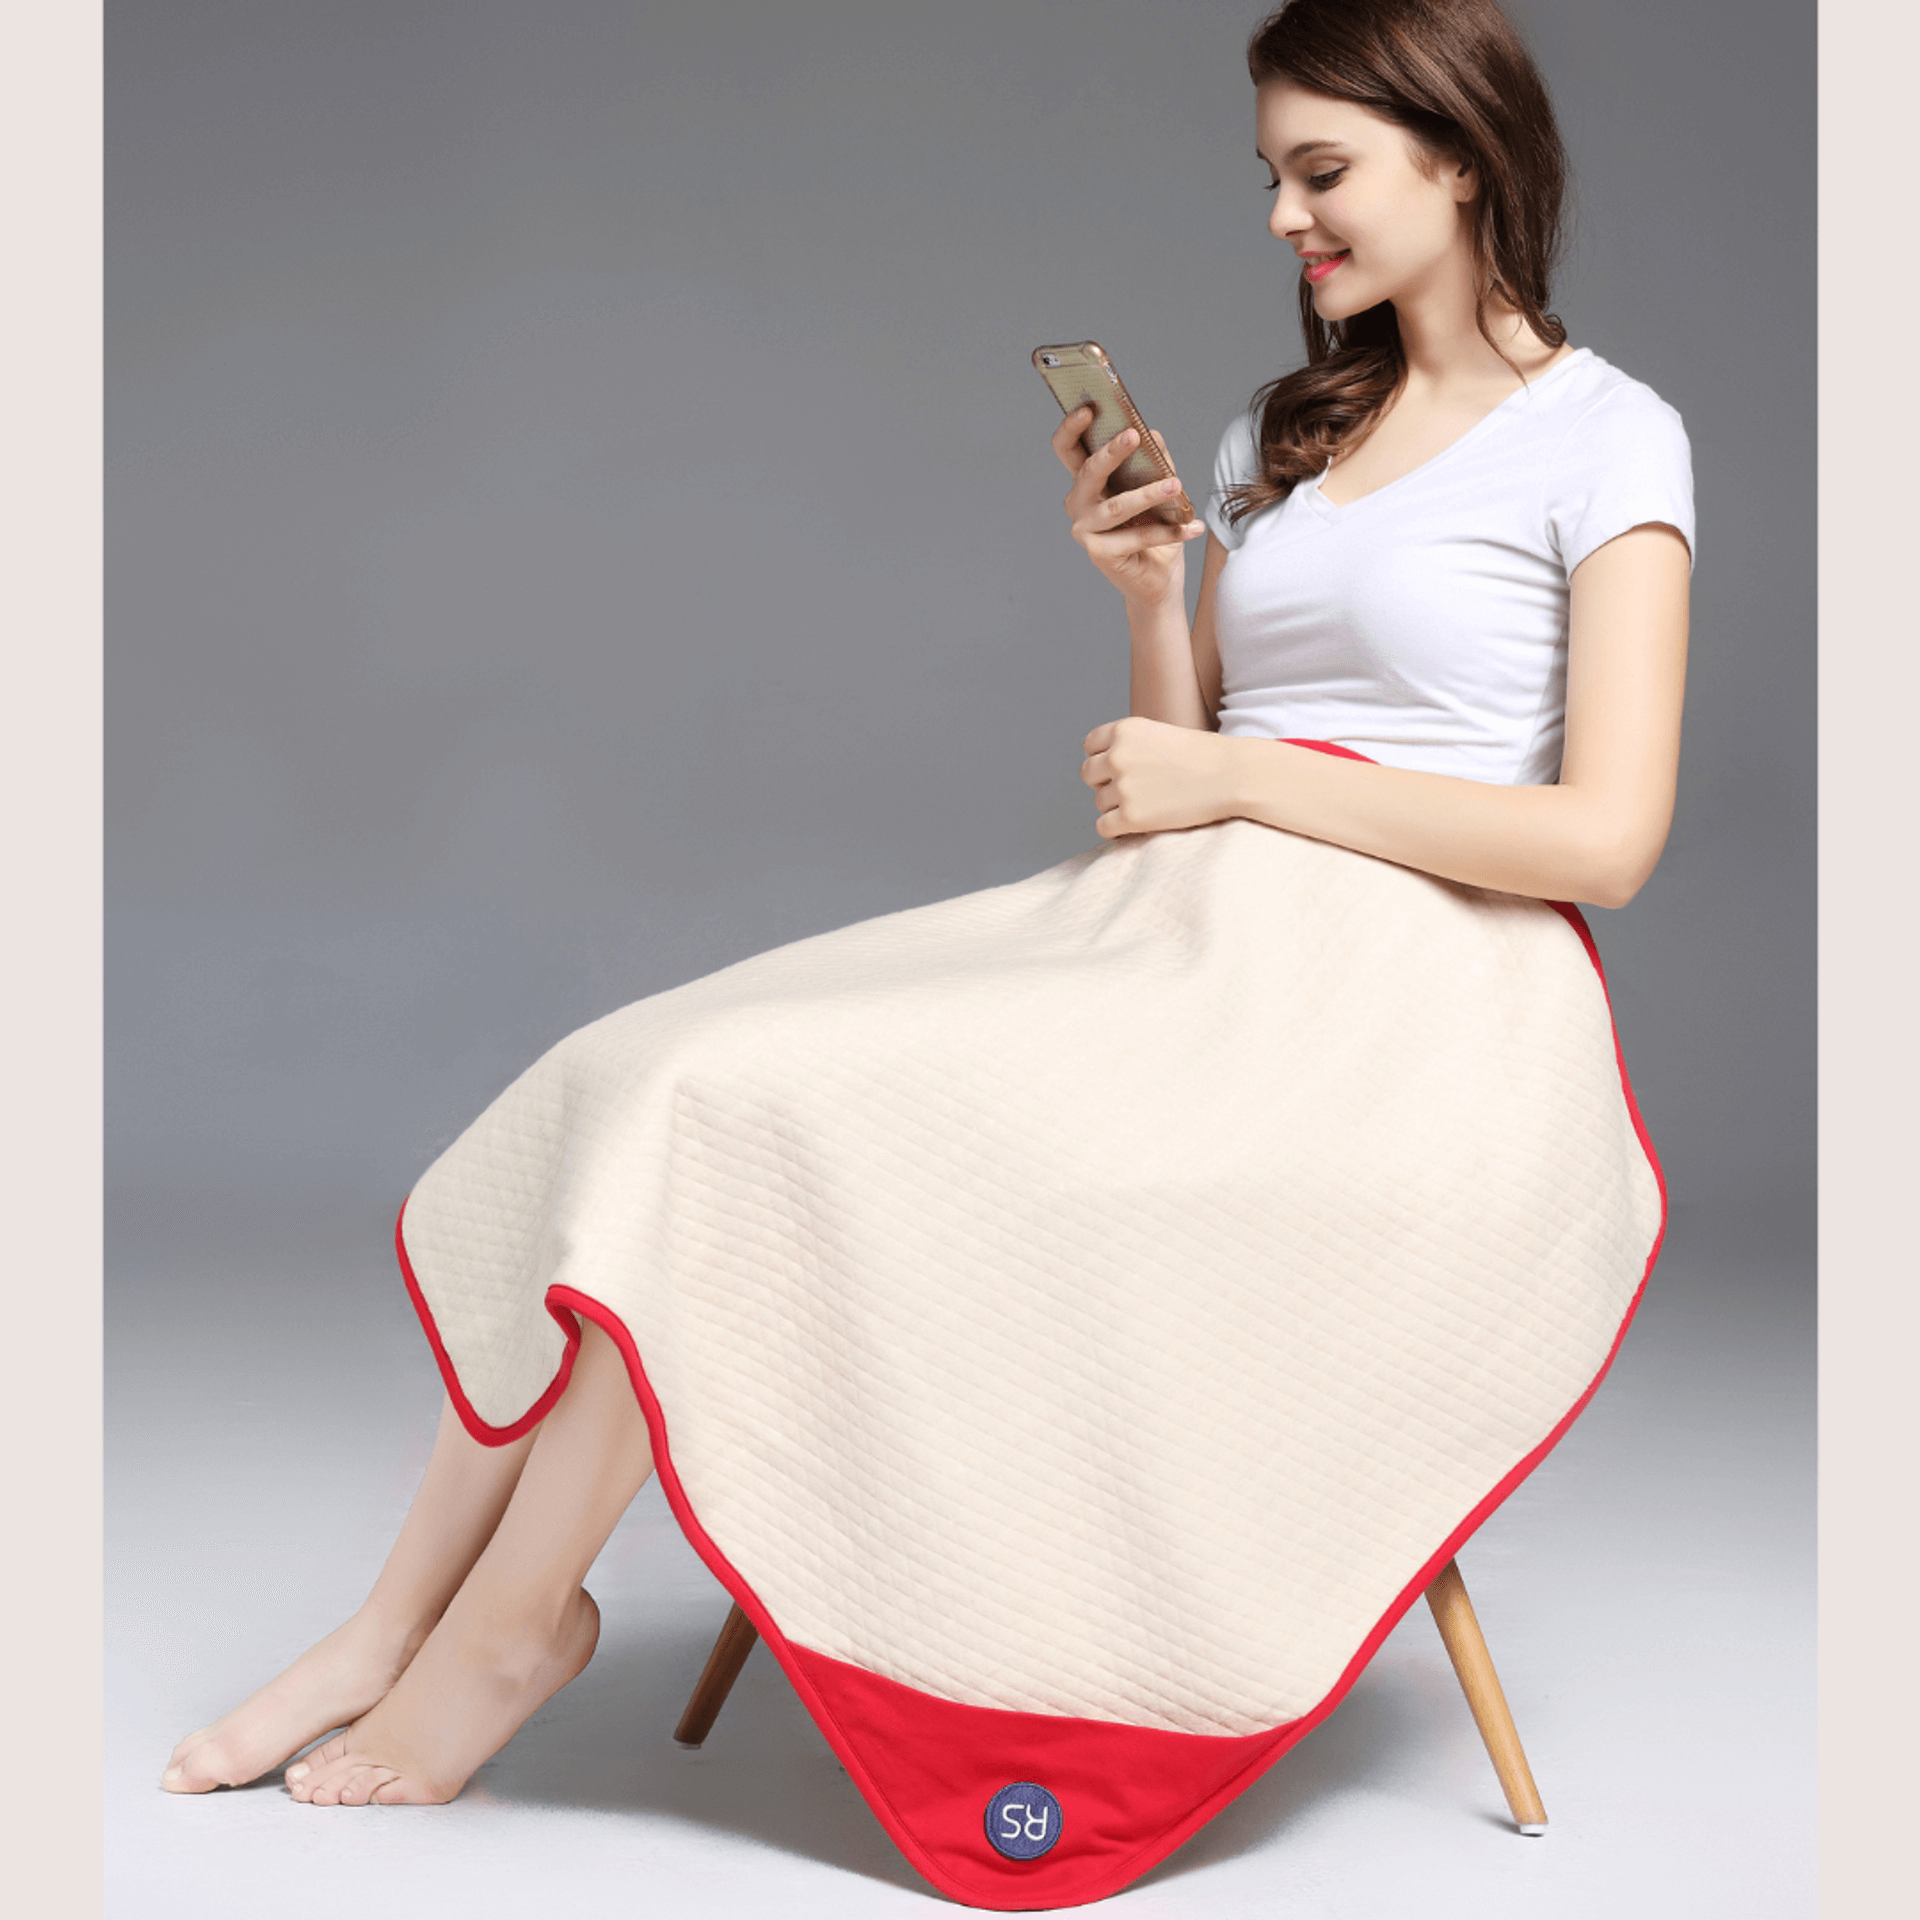 JLSJ EMF Protection Faraday Blanket,,Anti-Radiation Maternity Wrap